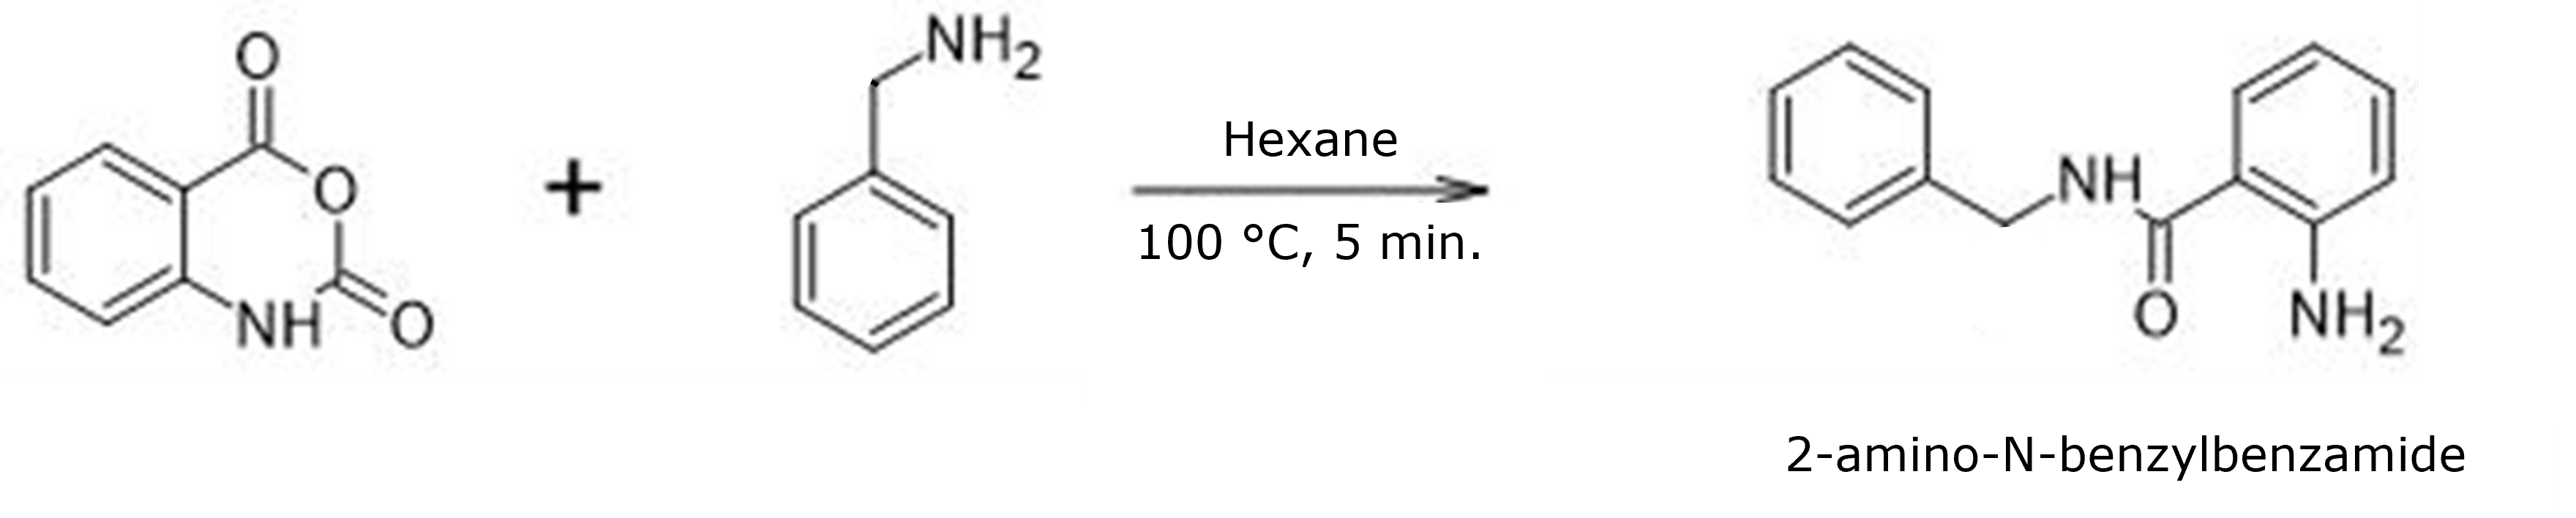 IA+BA reaction 100C, 5 min hexane